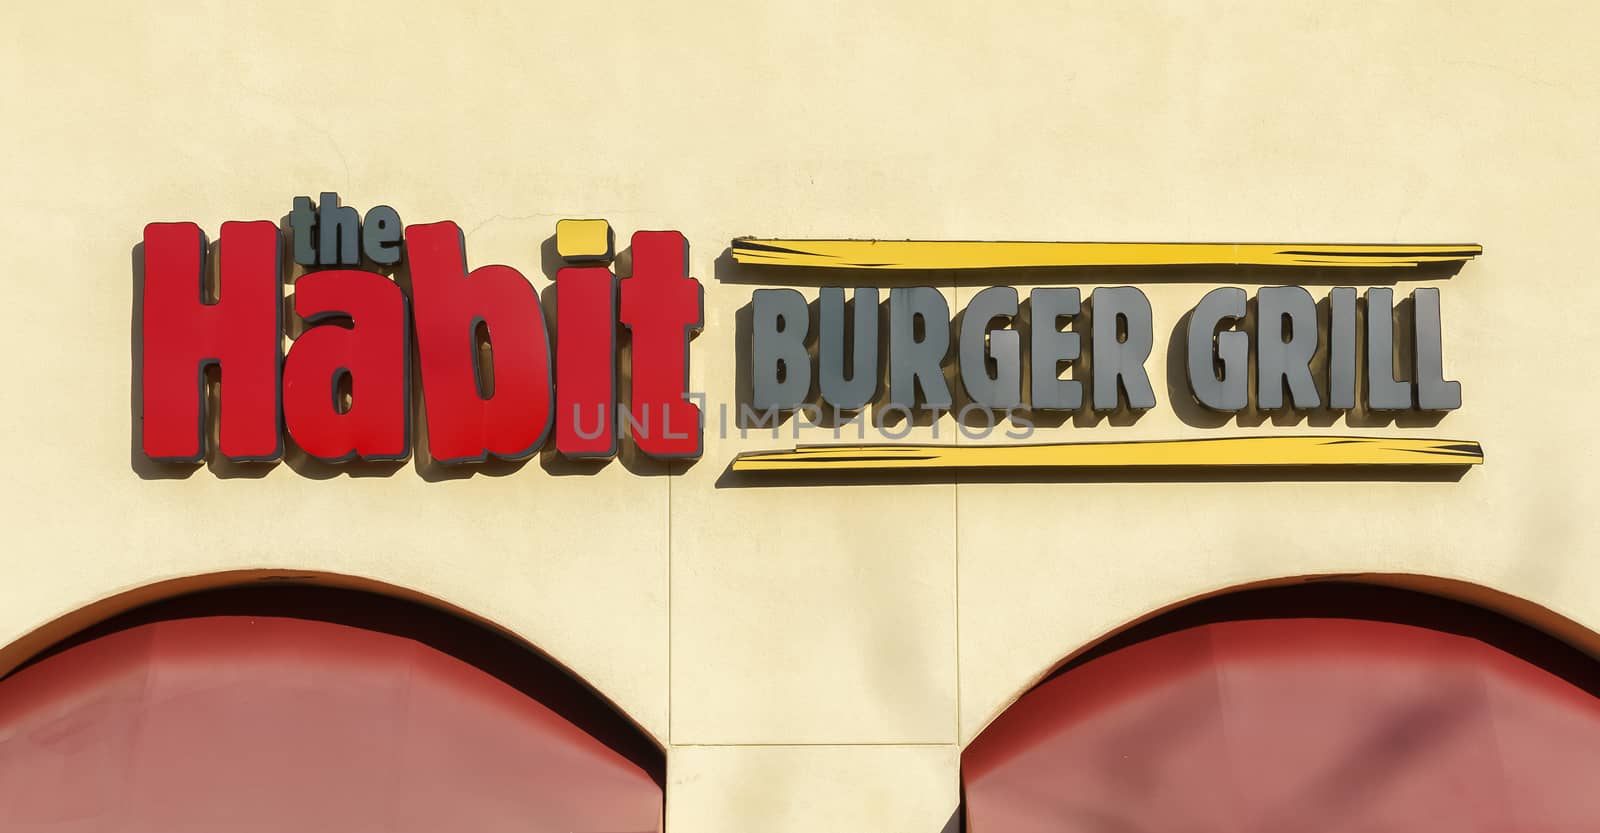 SANTA CLARITA, CA/USA - DECEMBER 28, 2015: The Habit Burger Grill exterior and logo. The Habit is a fast casual restaurant chain.